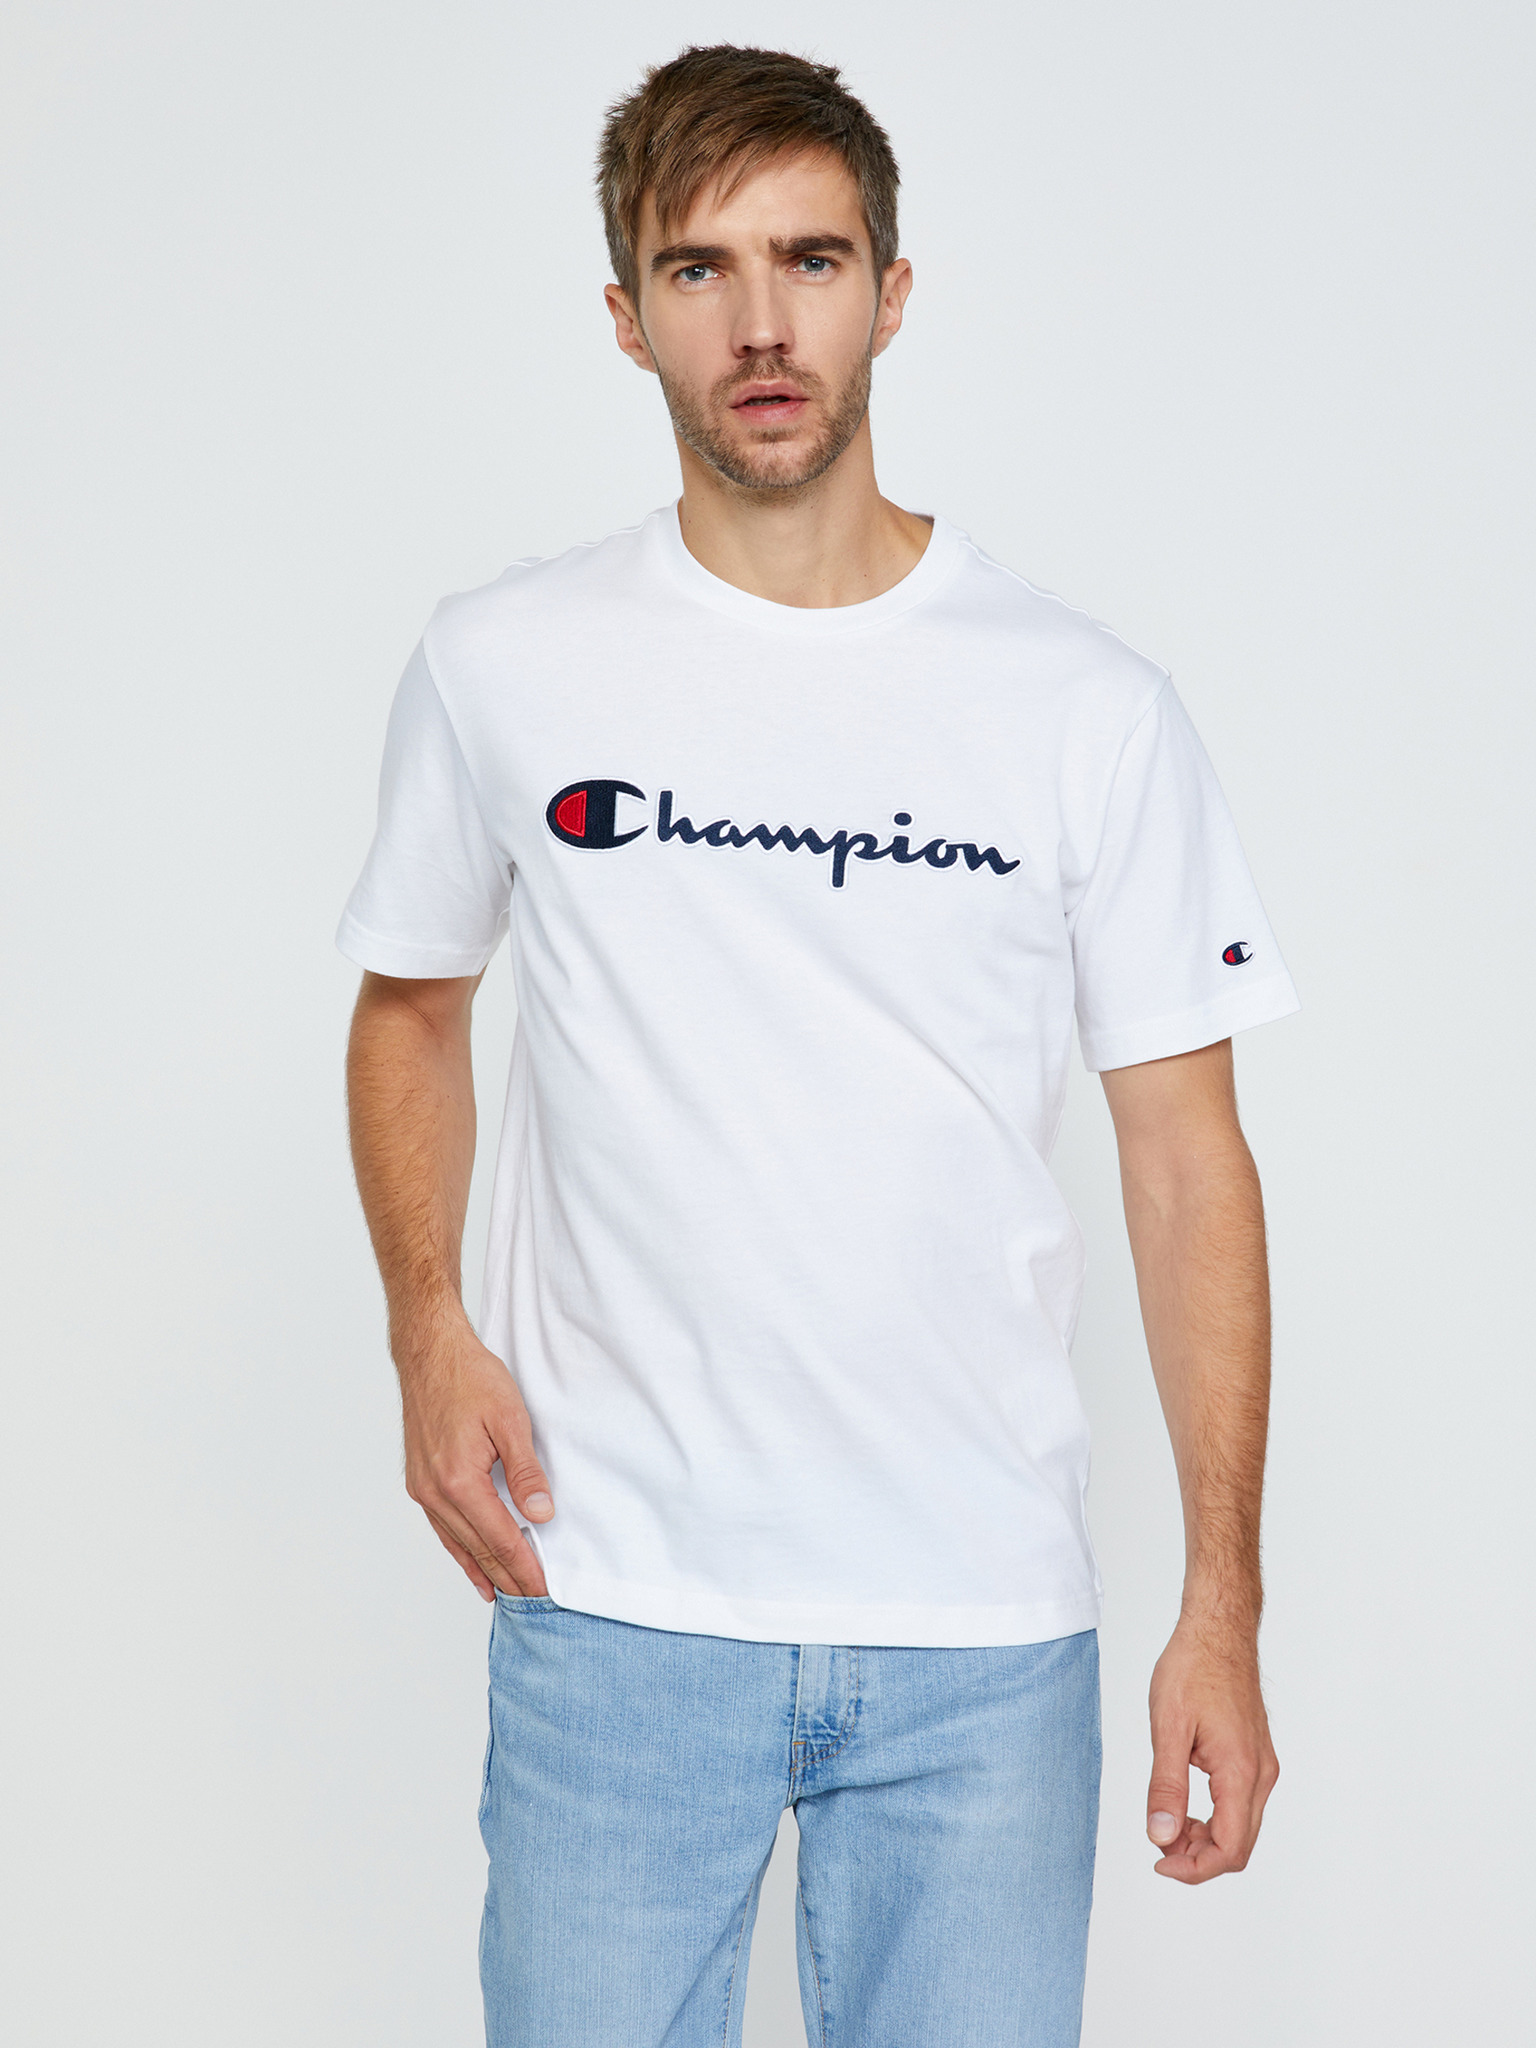 Champion T-shirt Bibloo.com